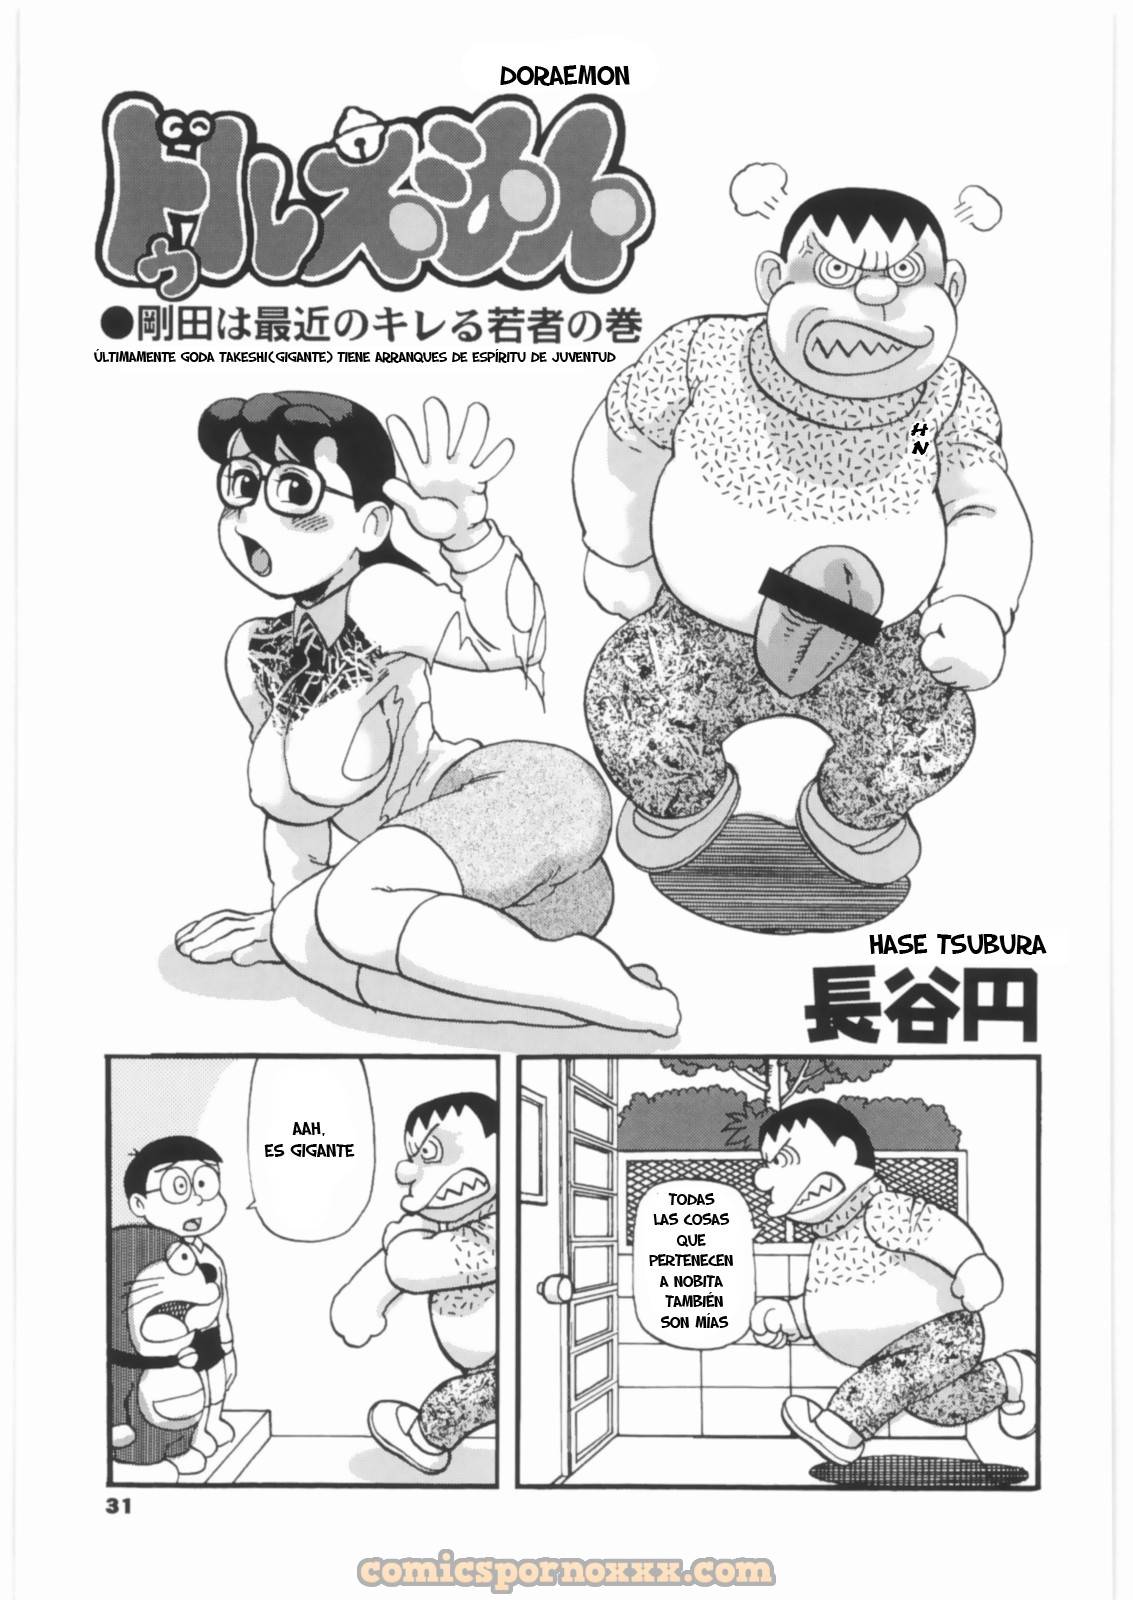 Doraemon Porno - 1 - Comics Porno - Hentai Manga - Cartoon XXX